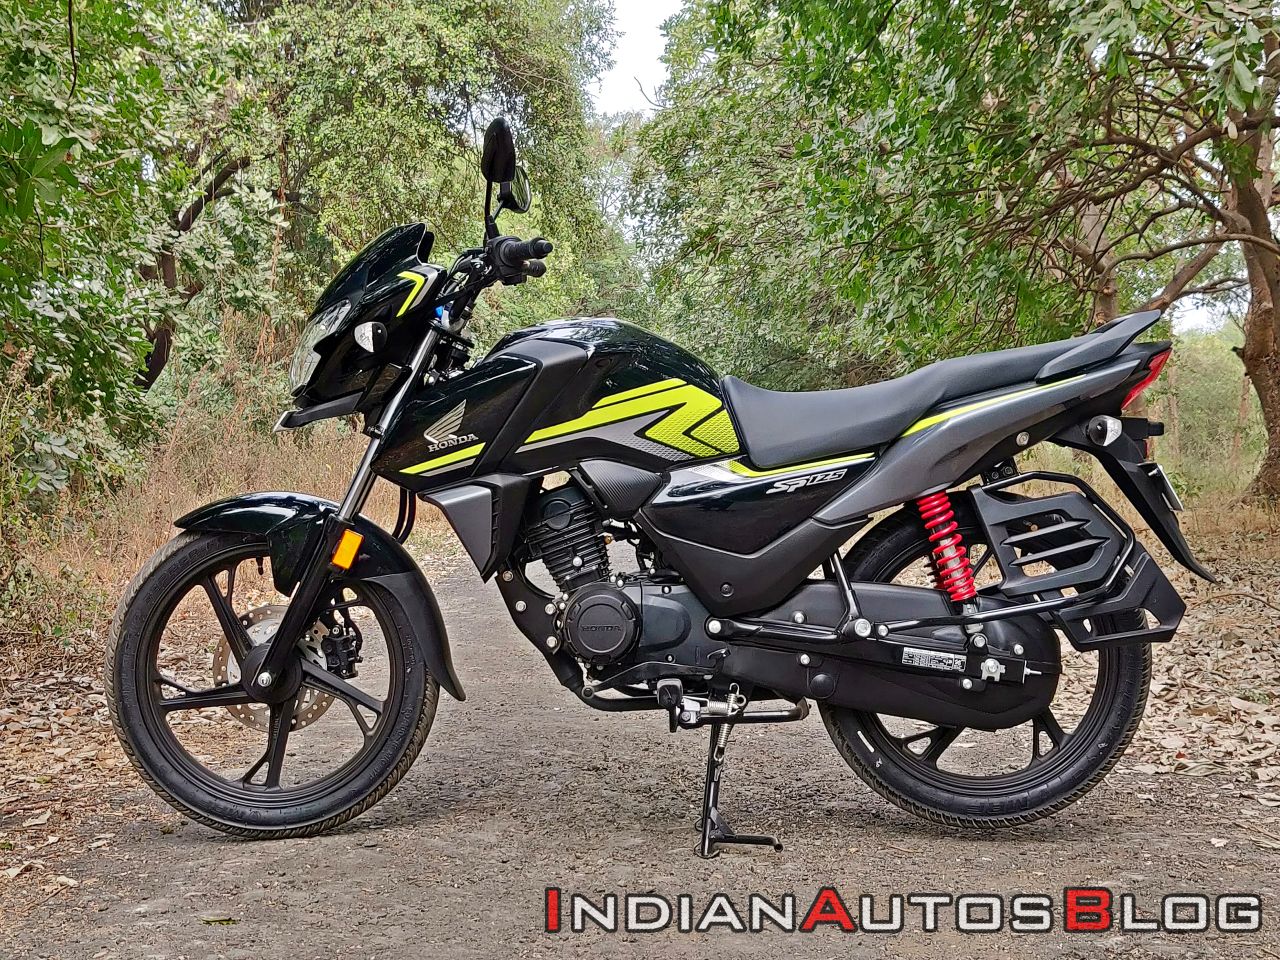 Bs Vi Honda Scooter And Bike Sales Cross 5 5 Lakh Units